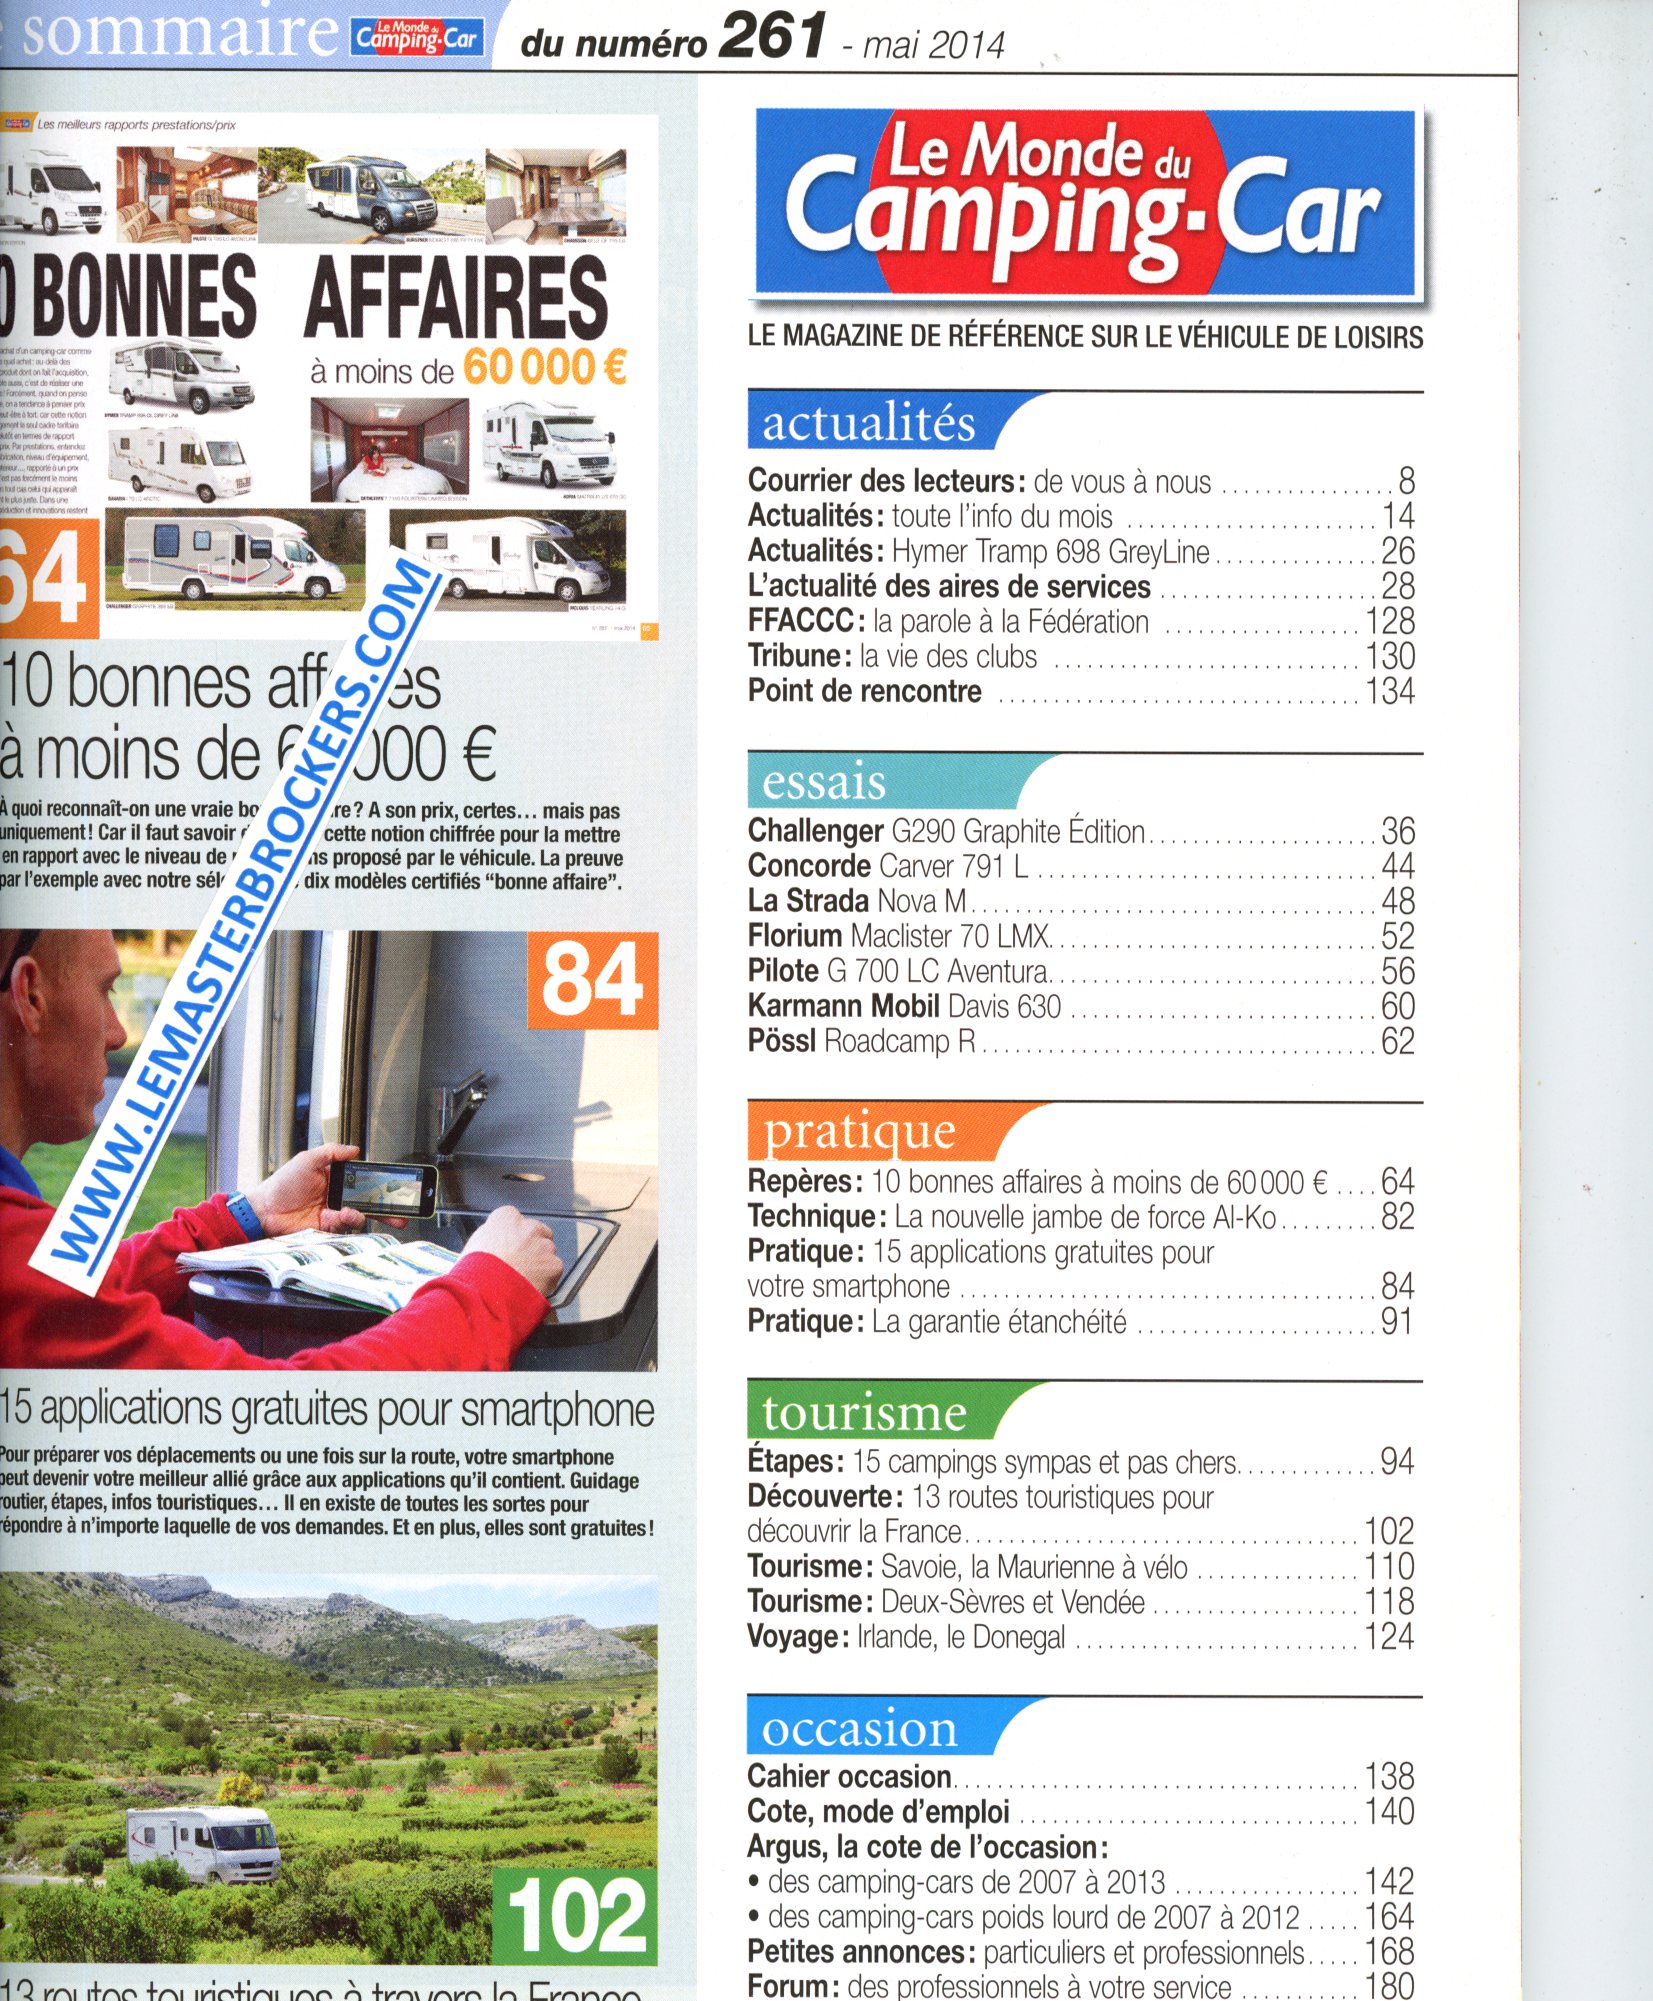 LE MONDE DU CAMPING-CAR 261 MAI 2014